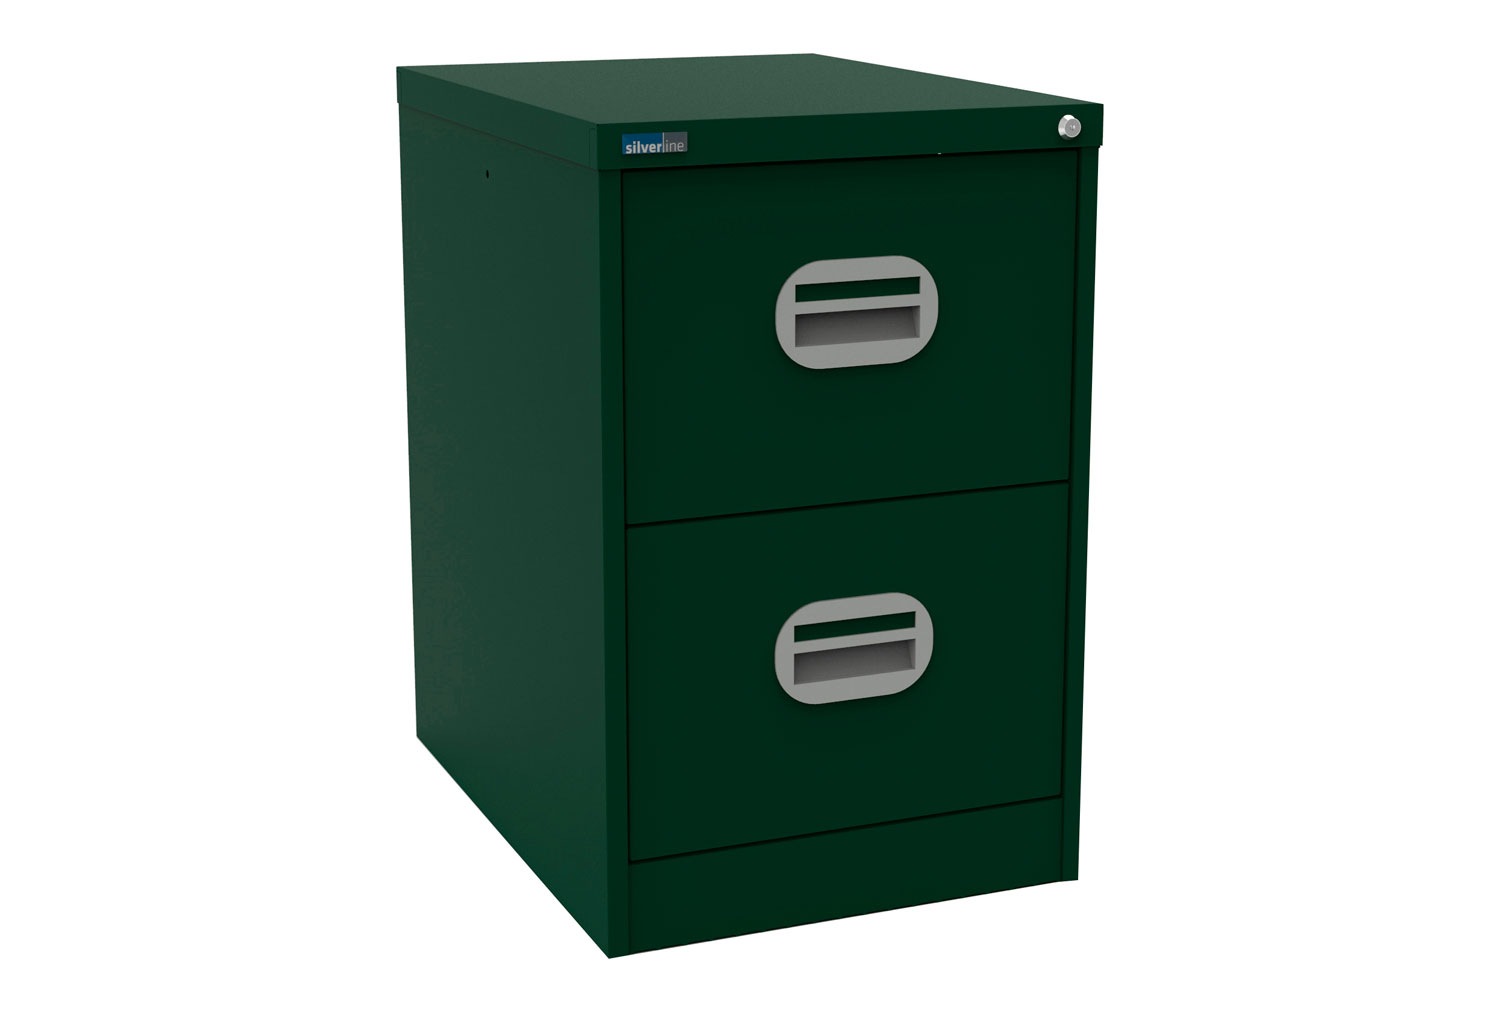 Silverline Kontrax 2 Drawer Filing Cabinet, 2 Drawer - 46wx62dx71h (cm), Green